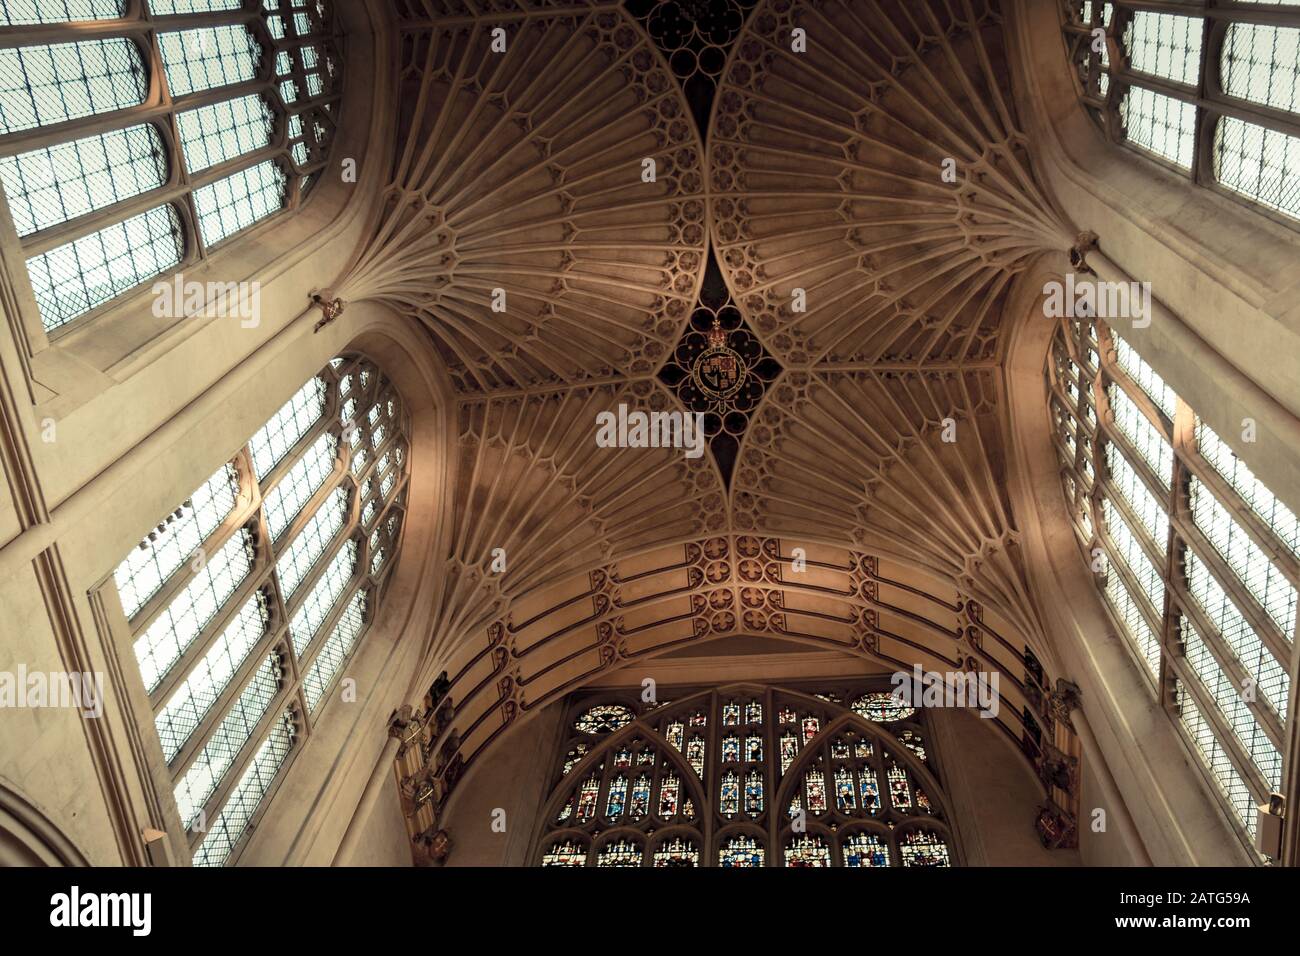 Fan Vaulting Ceiling Interior Bath Abbey, England Stock Photo